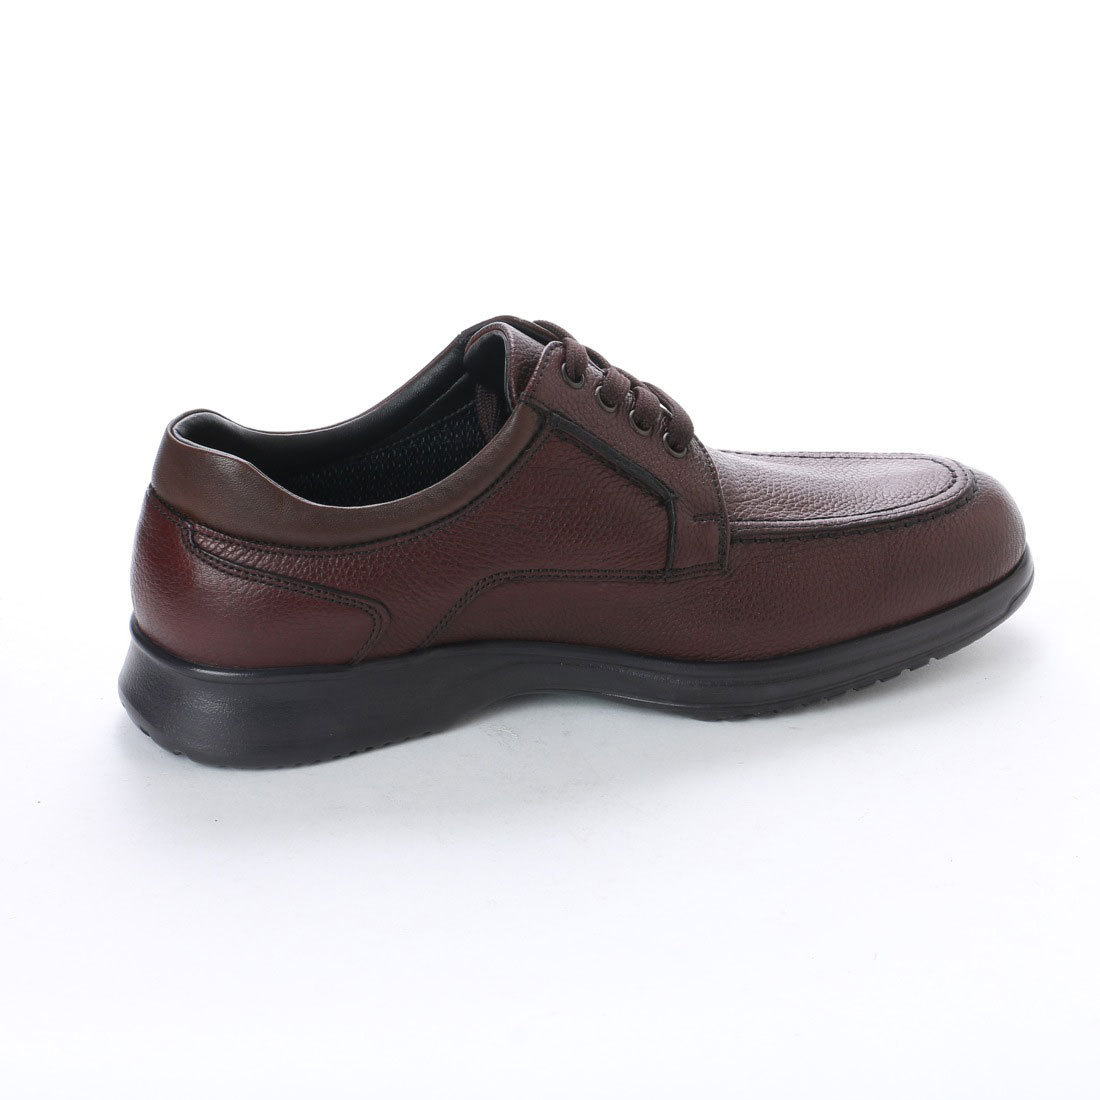 ^madras Walkma gong s walking casual shoes Gore-Tex MW8008 waterproof dark brown burnt tea 26.5cm (0910010300-db-s265)